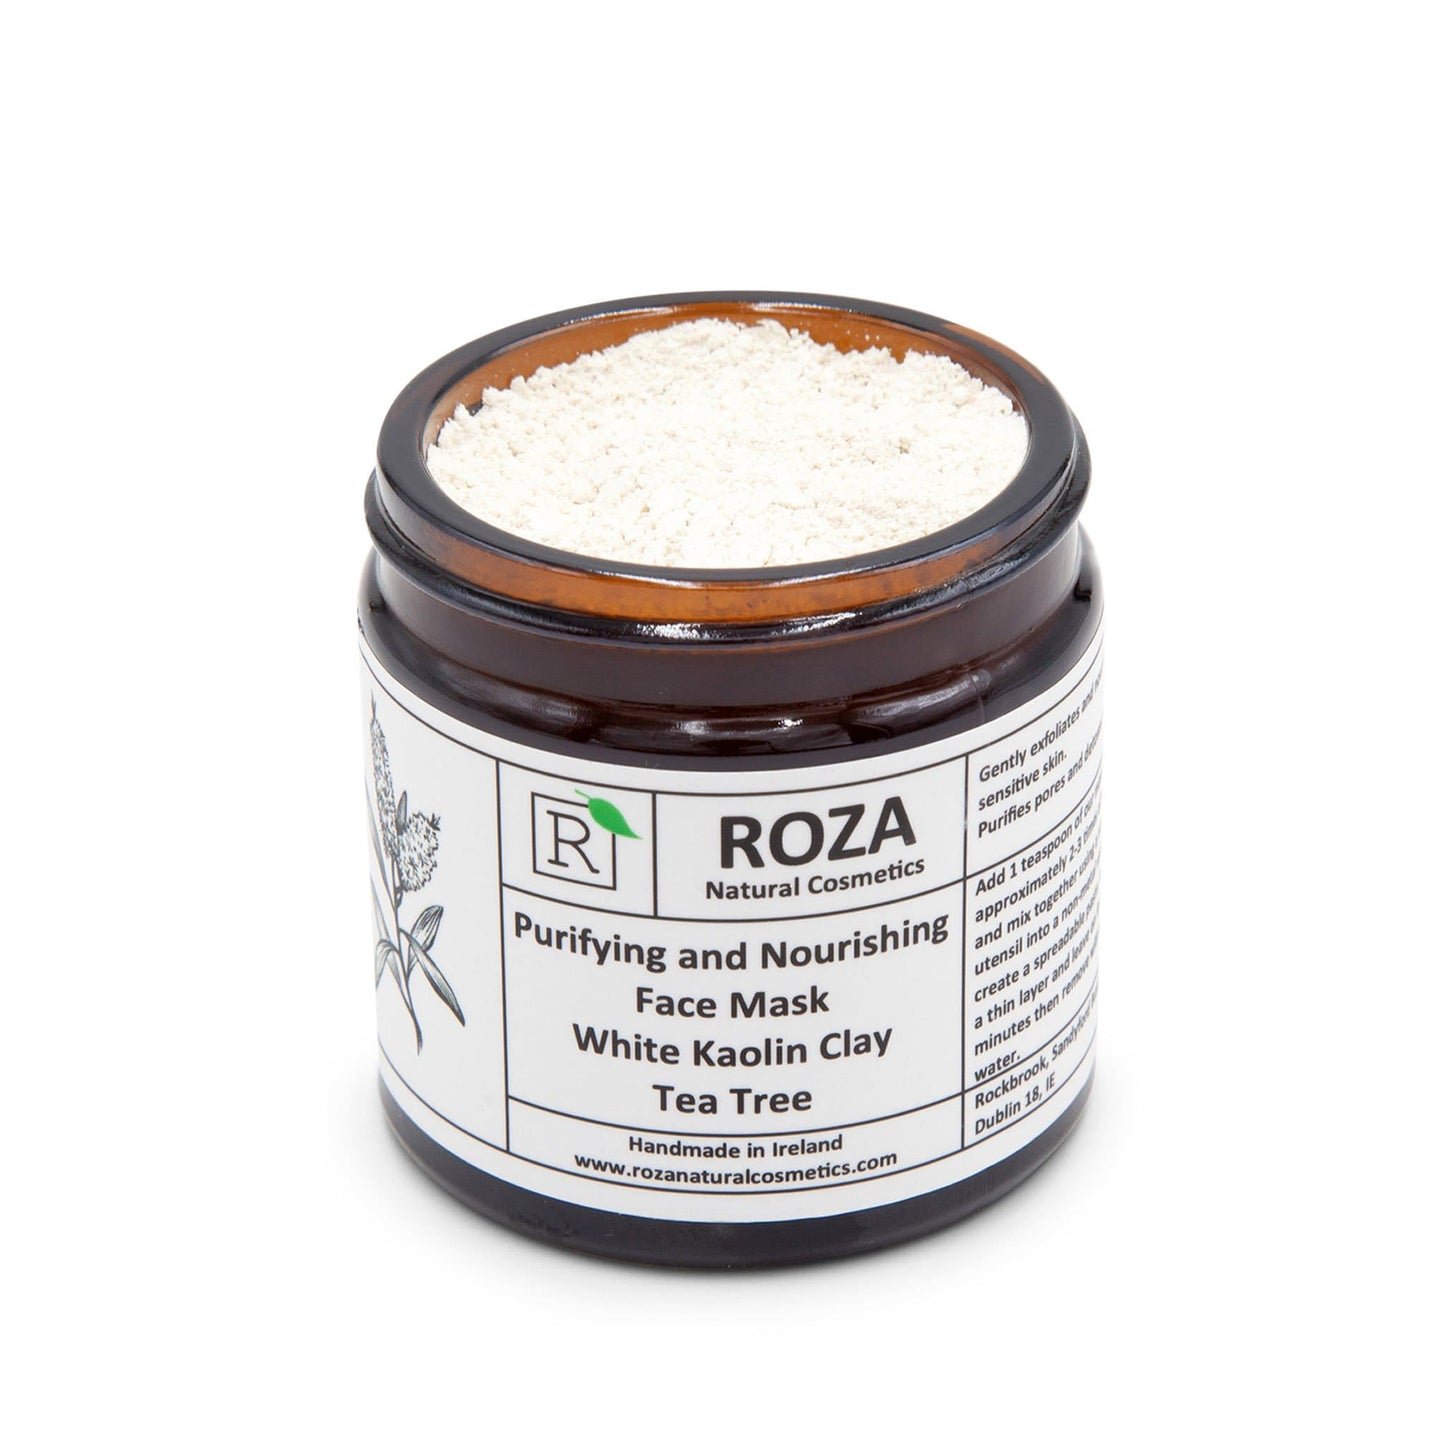 Roza Natural Cosmetics Skincare Roza Purifying Face Mask with White Kaolin Clay & Tea Tree 60ml